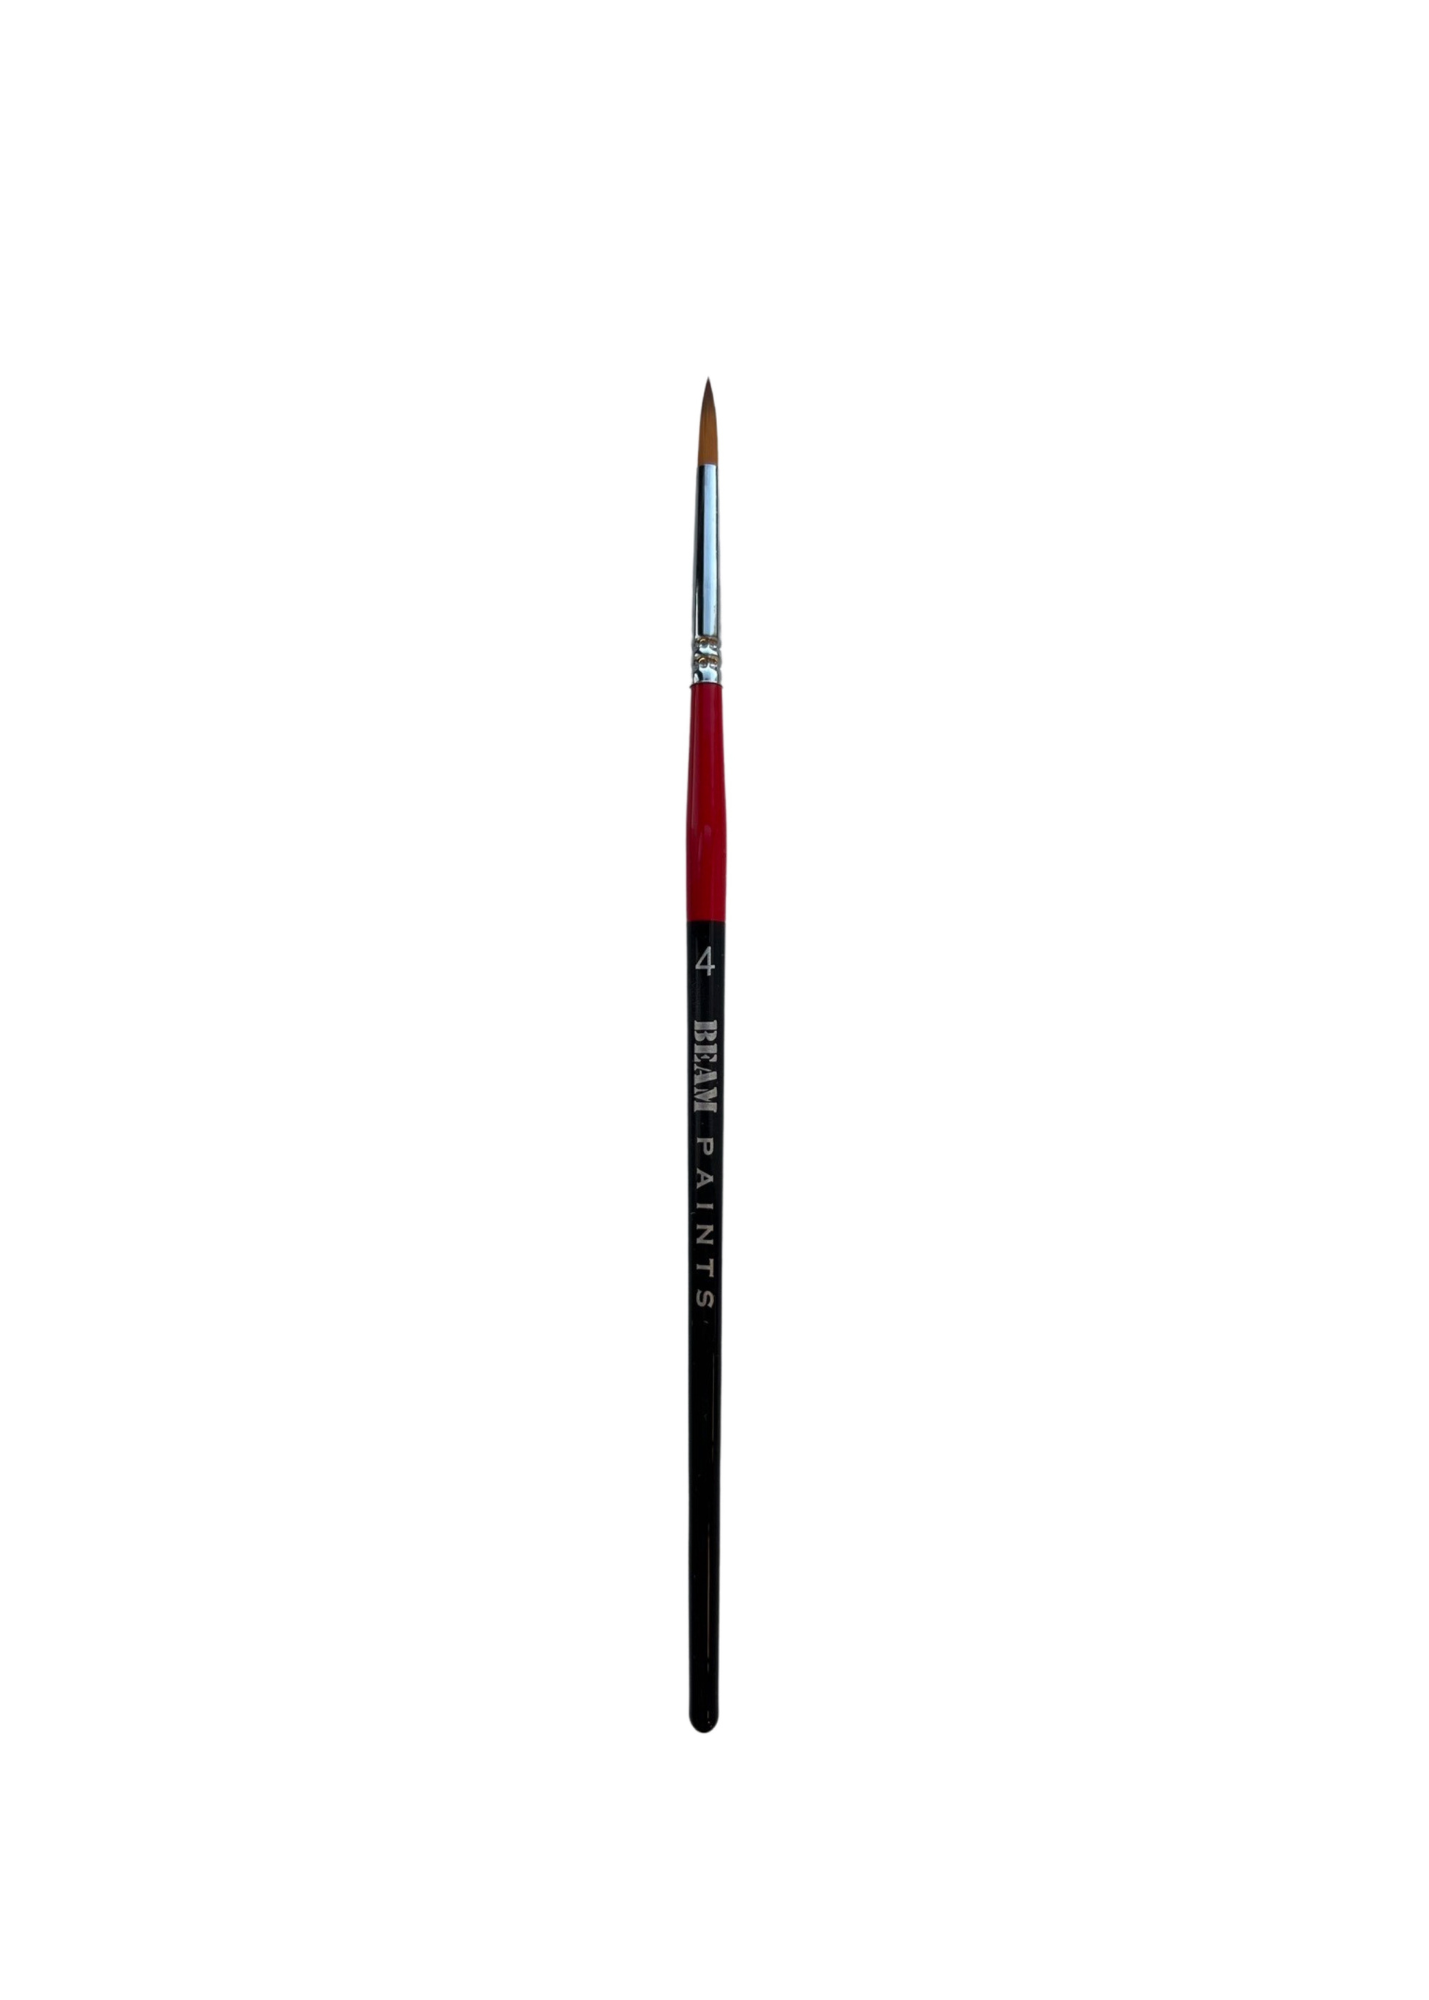 Beam Paints Basics 4 Brush - Narrow Handle